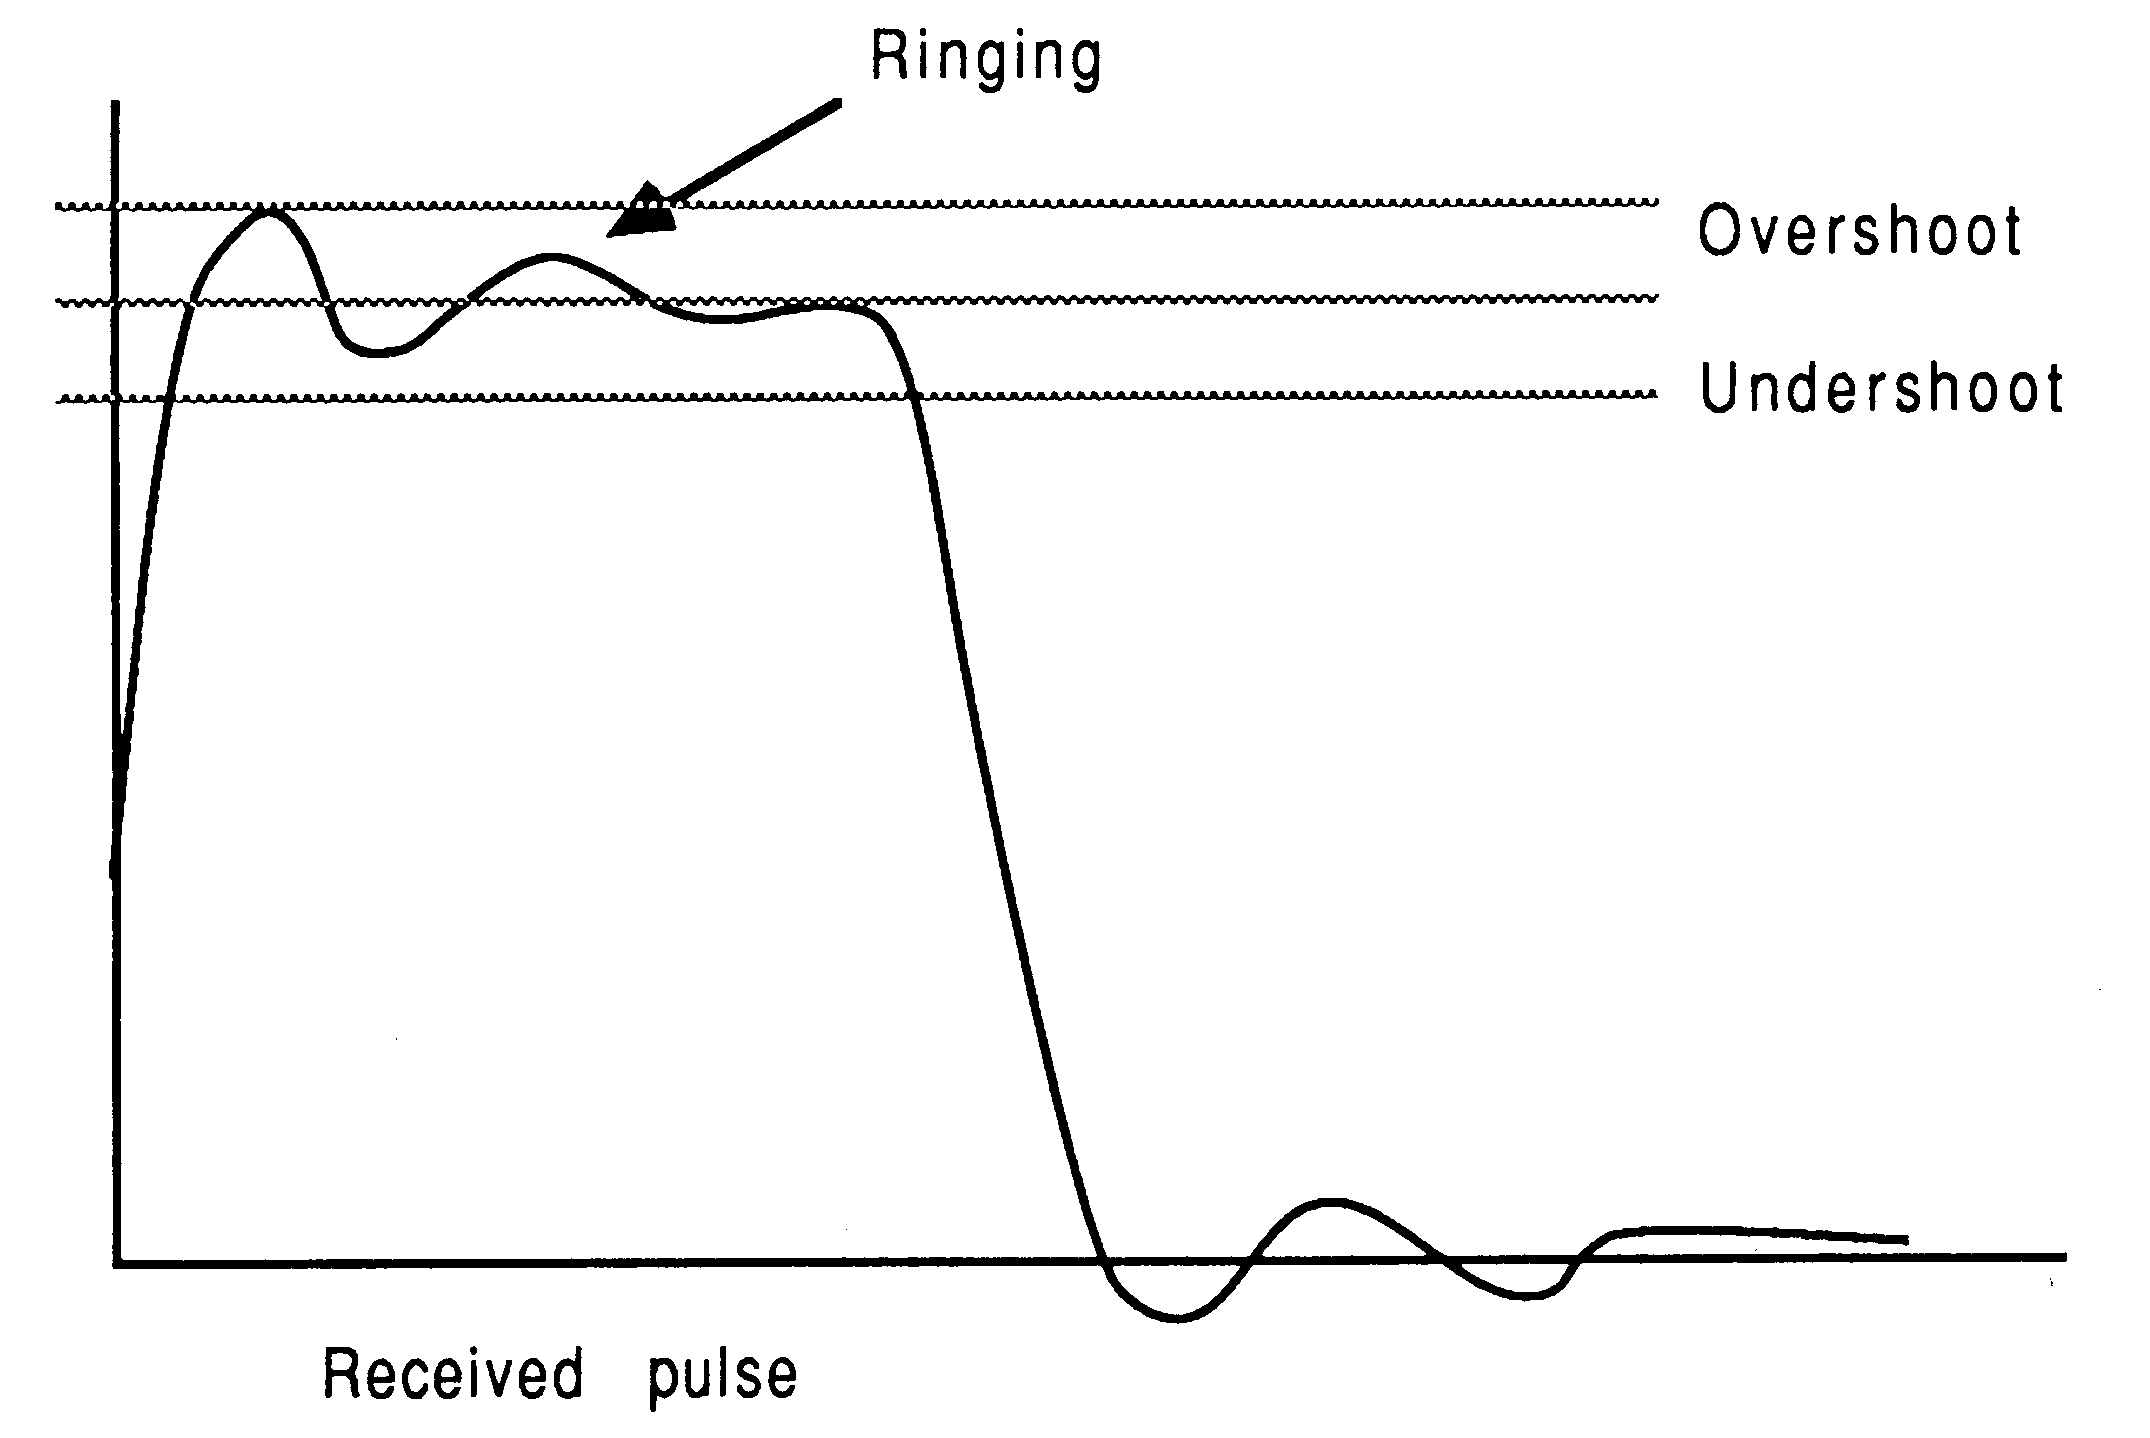 Transmission line effects